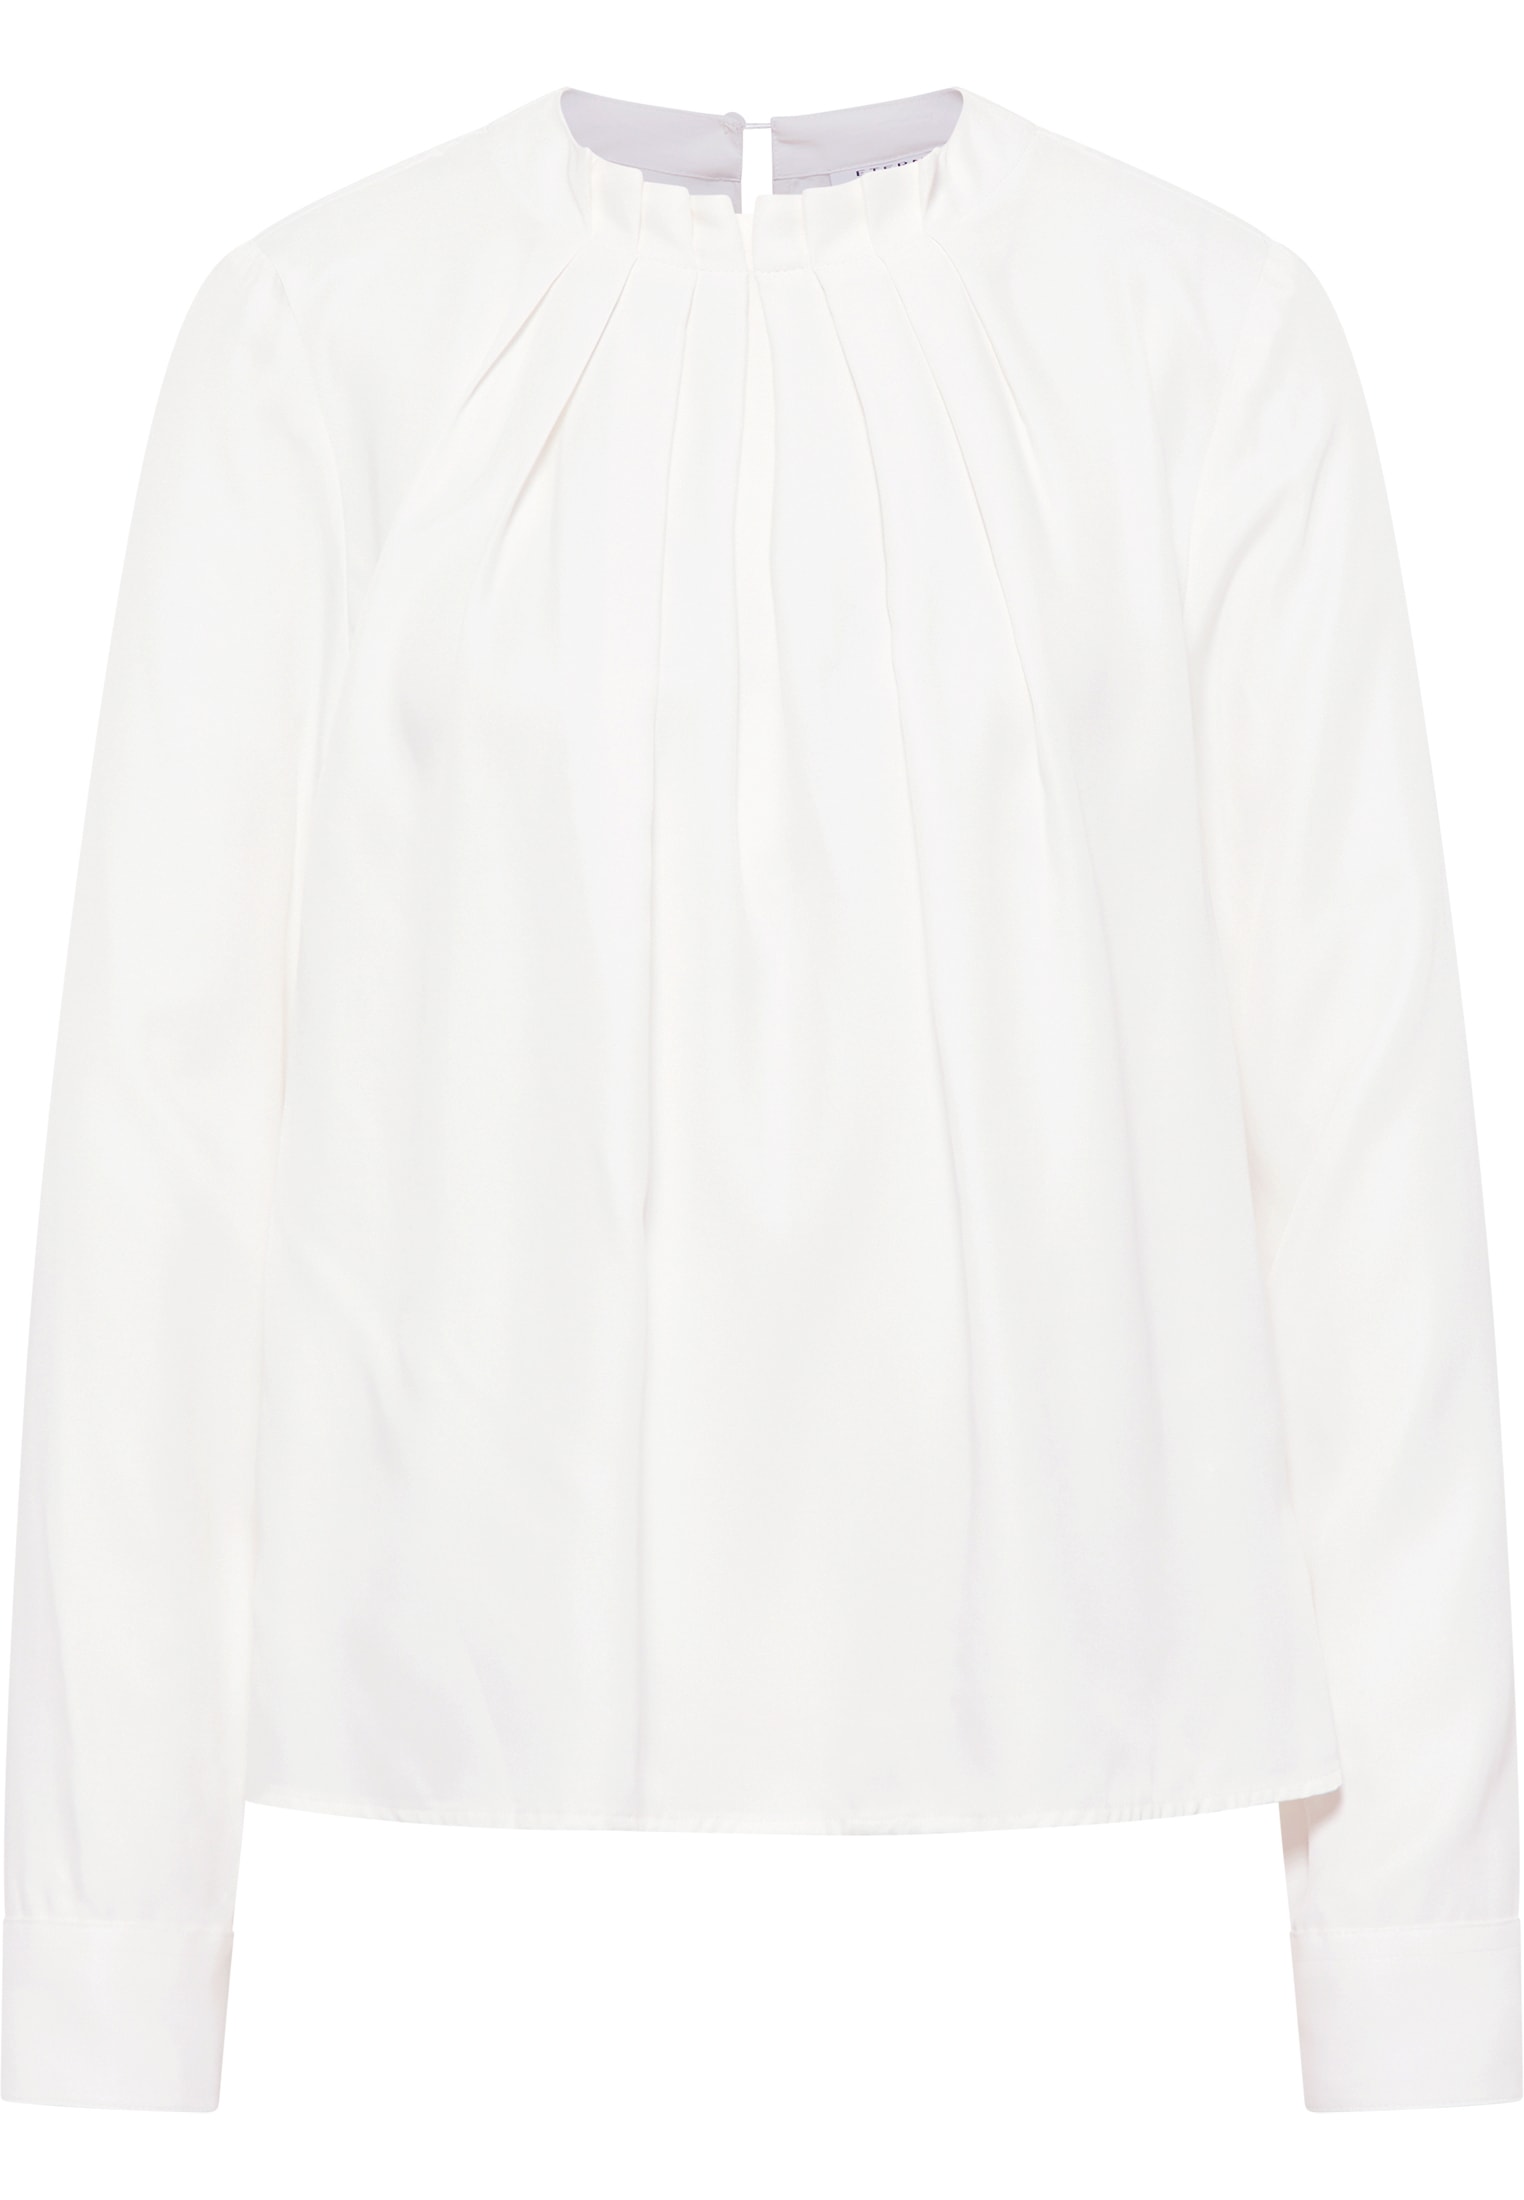 Viscose Shirt Bluse in off-white unifarben | off-white | 40 | Langarm |  2BL04240-00-02-40-1/1 | Blusenshirts